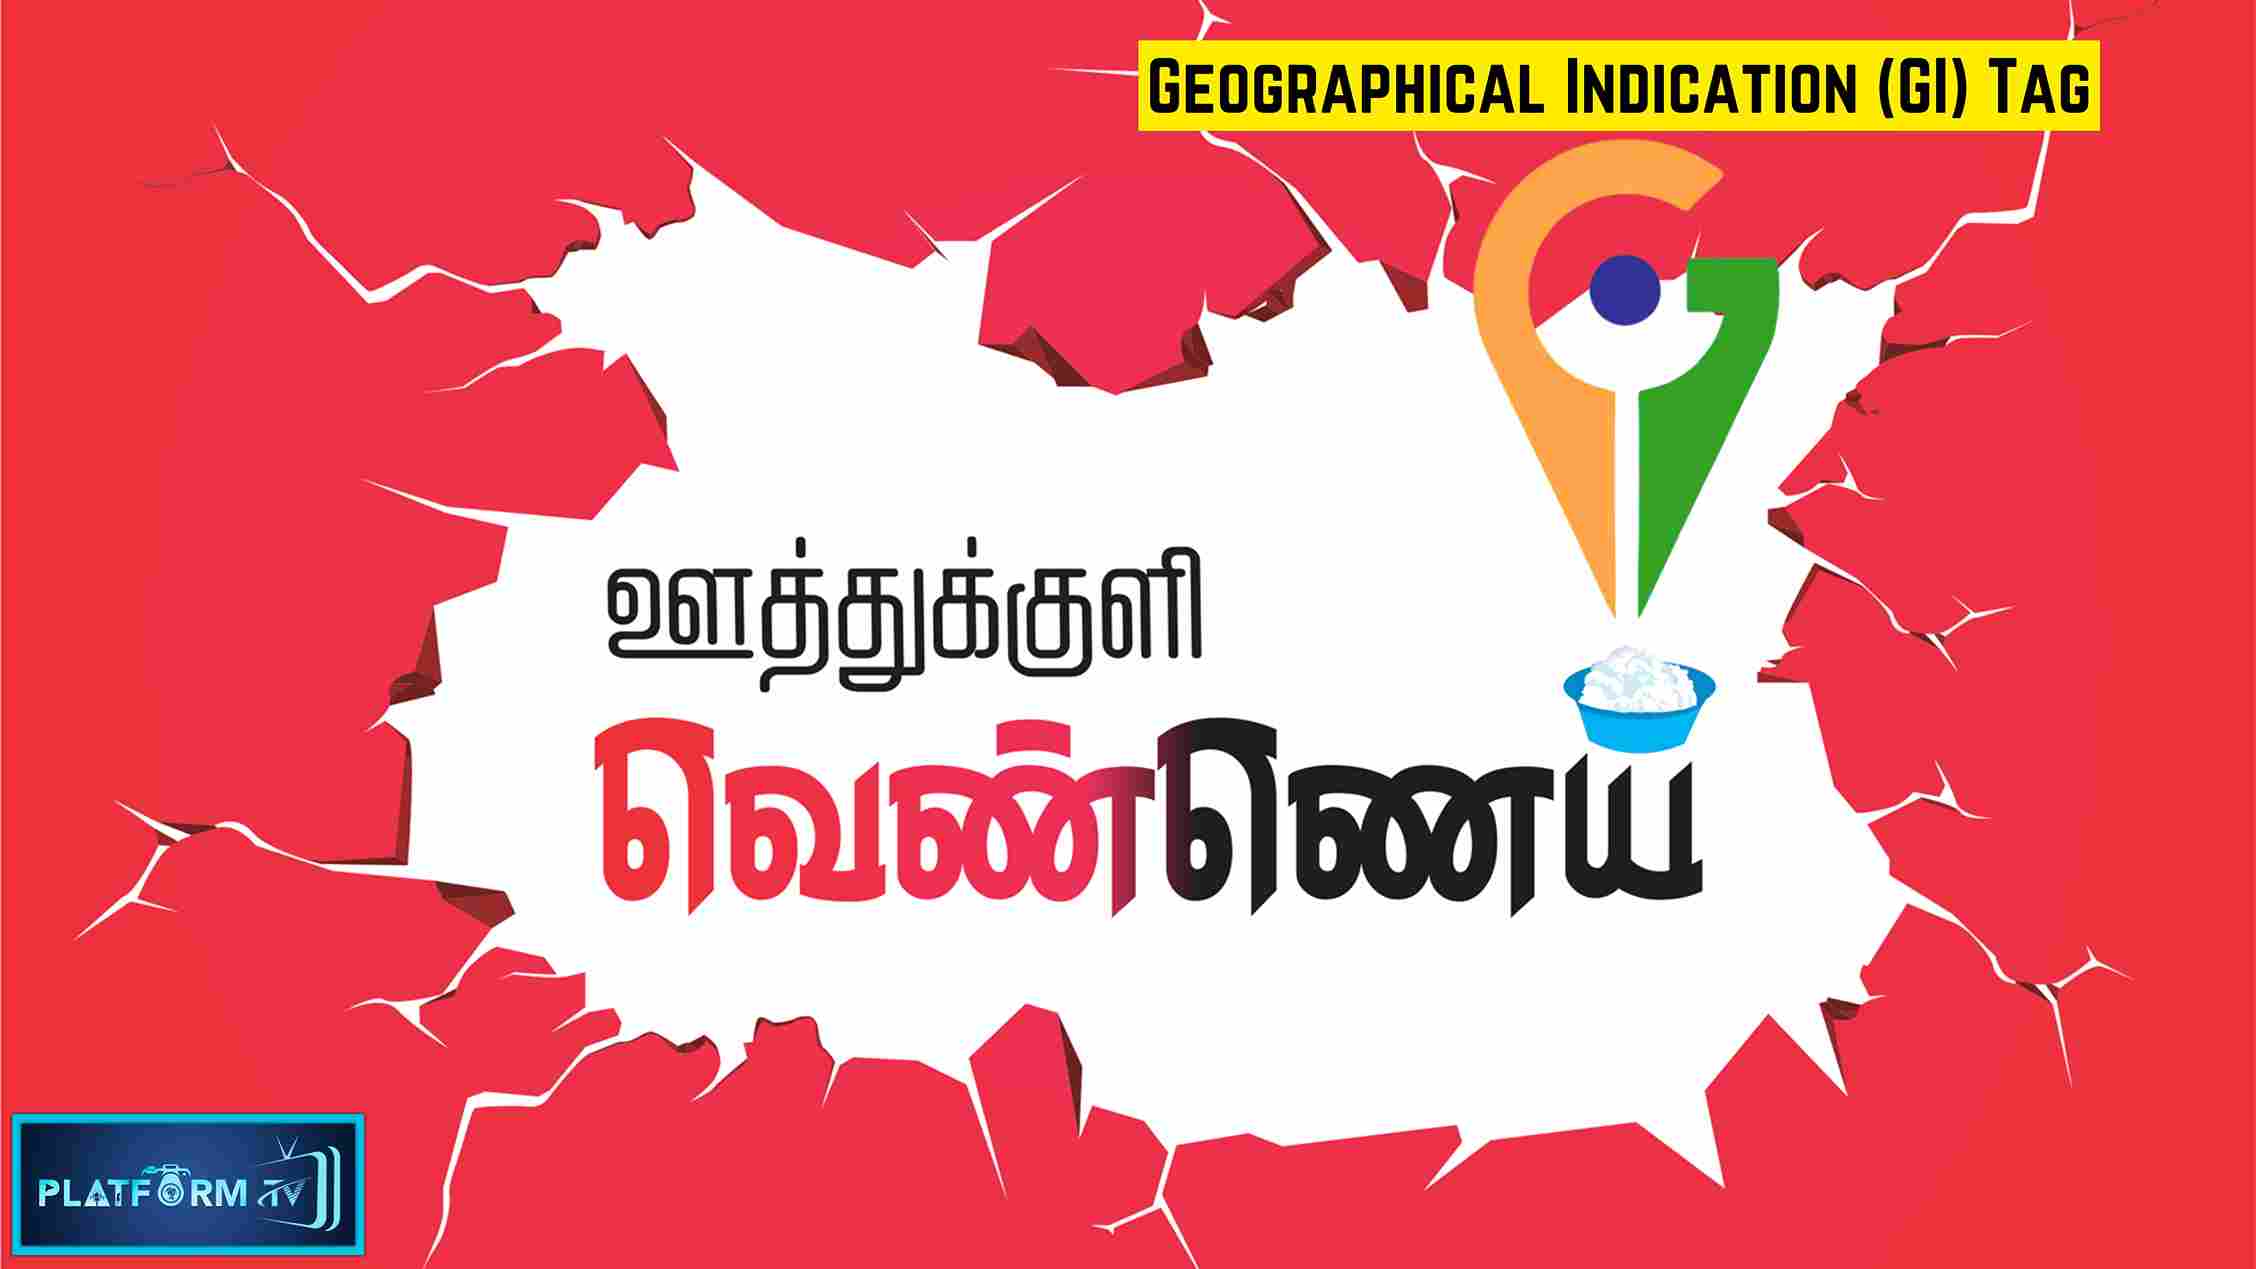 TN Utttukuli Butter Seeks GI Tag Status - Platform Tamil